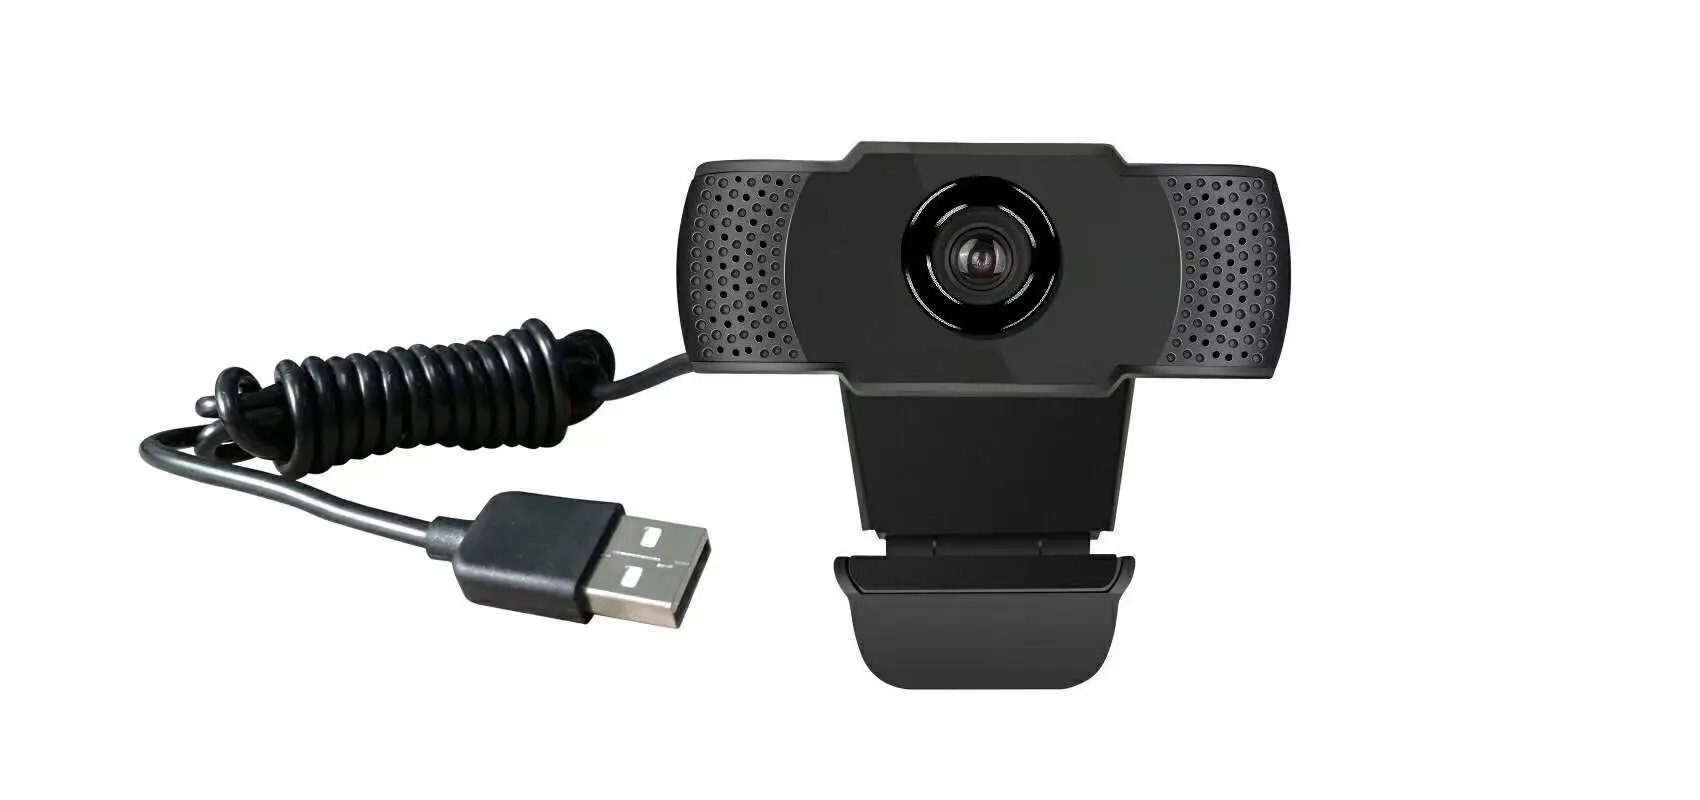 
Hot Selling 2.0Megapixel 1080P FHD USB Live Webcam Smart Digital Video Web Camera for Video Call Meeting Broadcast Live 